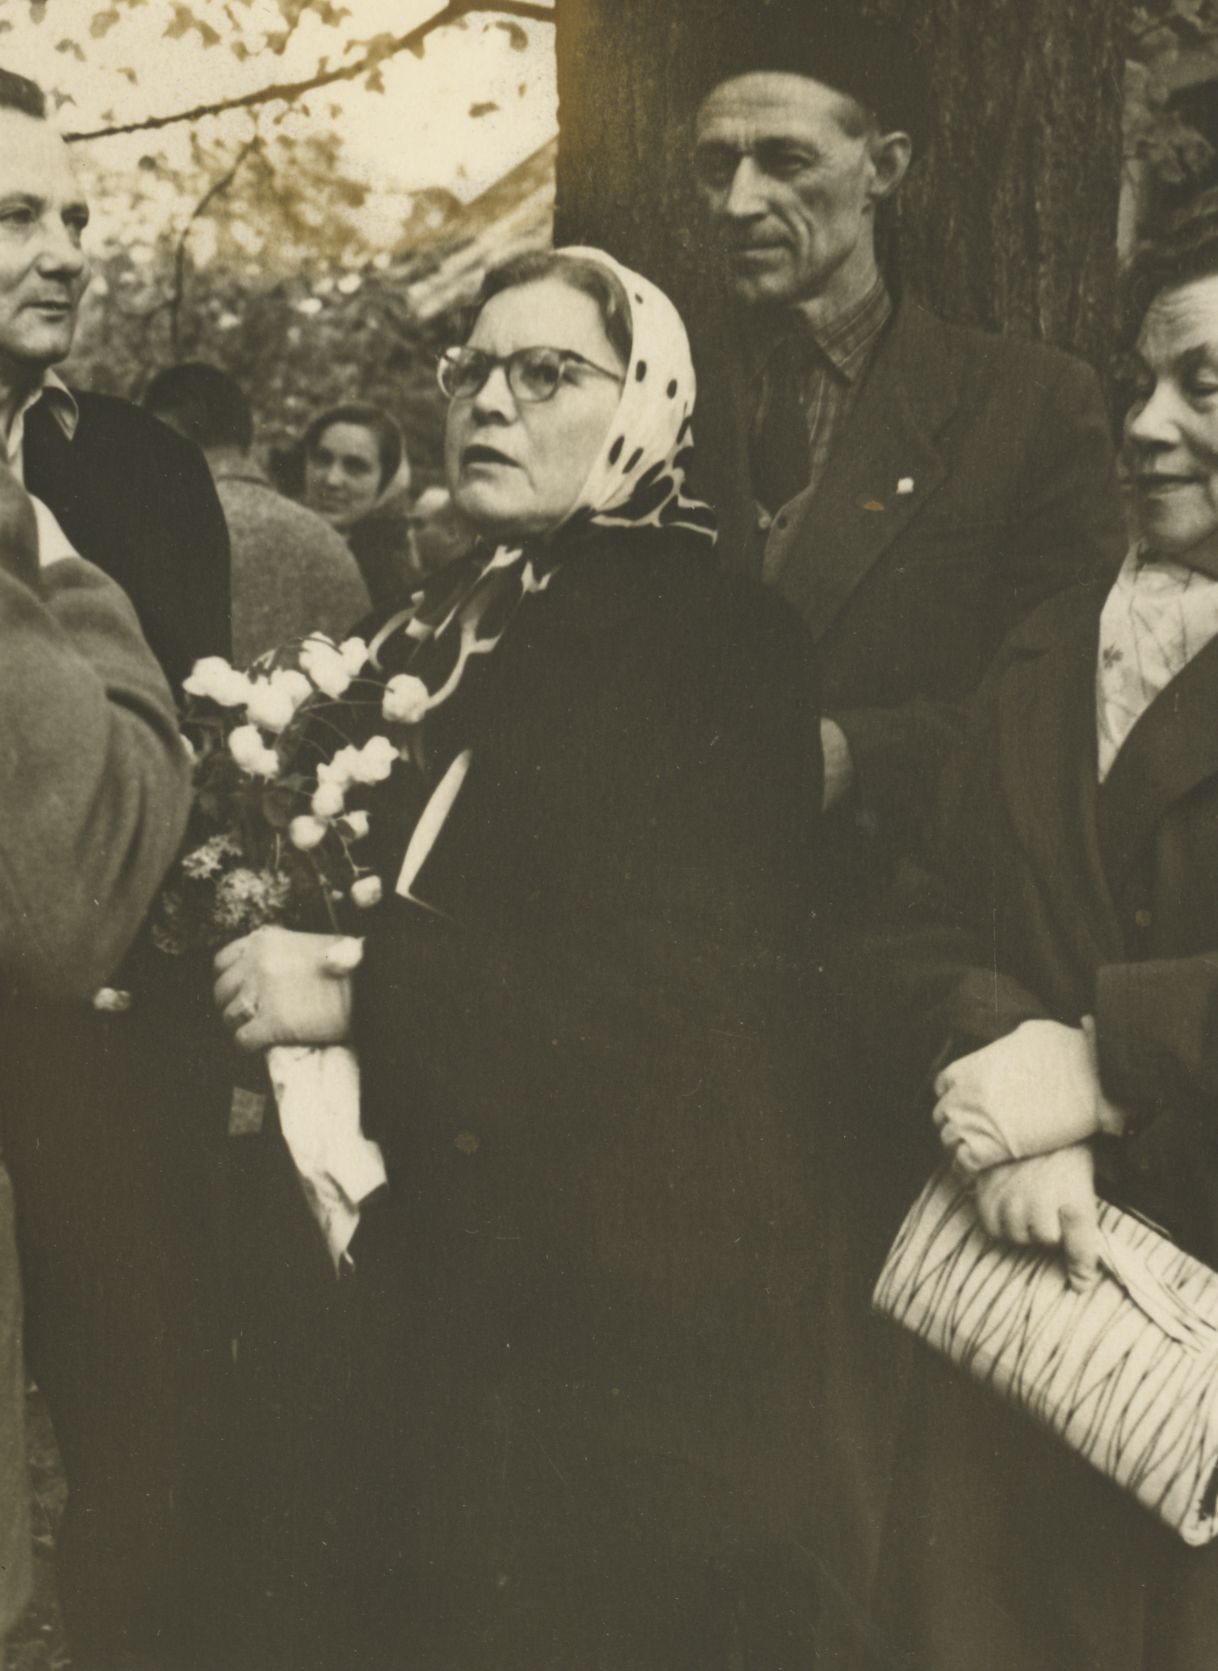 Guests at the opening of Jaan Kärner's memorial cup "Kinksepal" 27. V 1961 in the middle of Hilda Kärner, behind him Rudolf Sirge